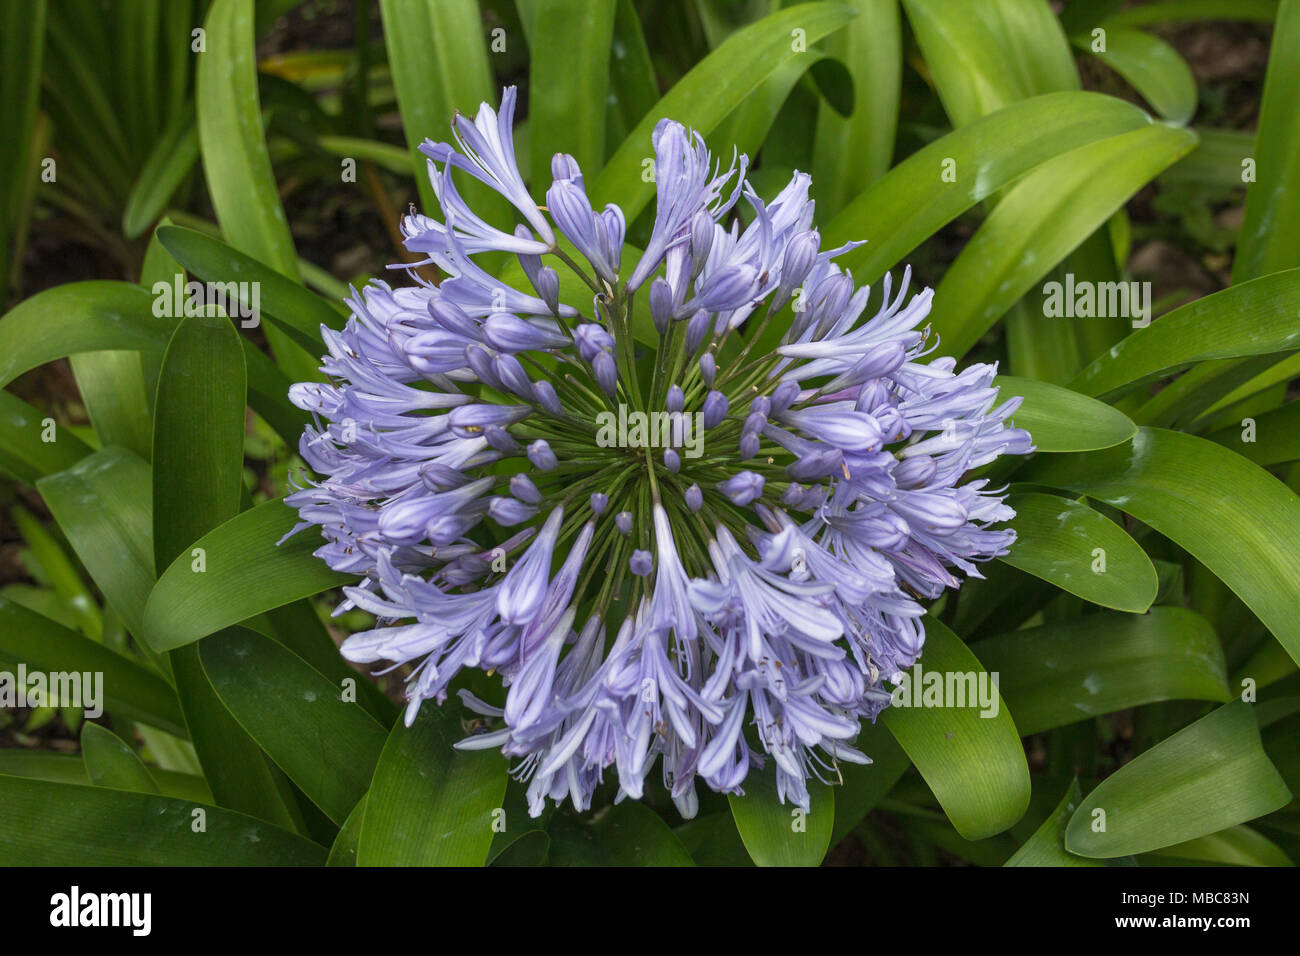 Colourful African Blue Lily - Agapanthus umbellatus - in Mi Jardin es su  Jardin ornamental garden in Boquete, Panama Stock Photo - Alamy